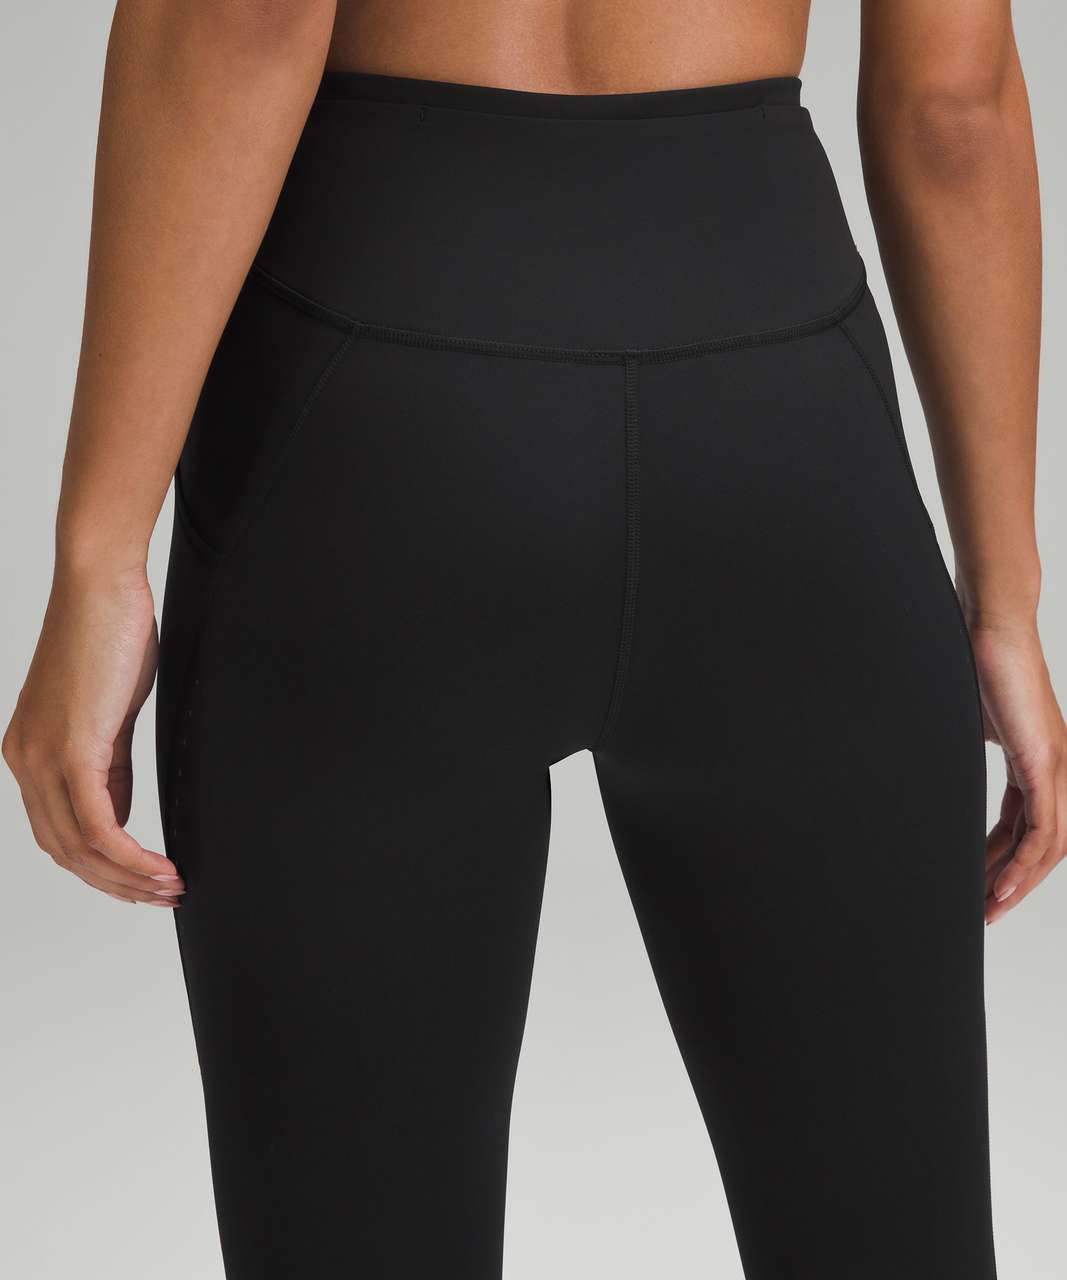 Lululemon Leggings Black With Pockets Size 6 - $40 (68% Off Retail